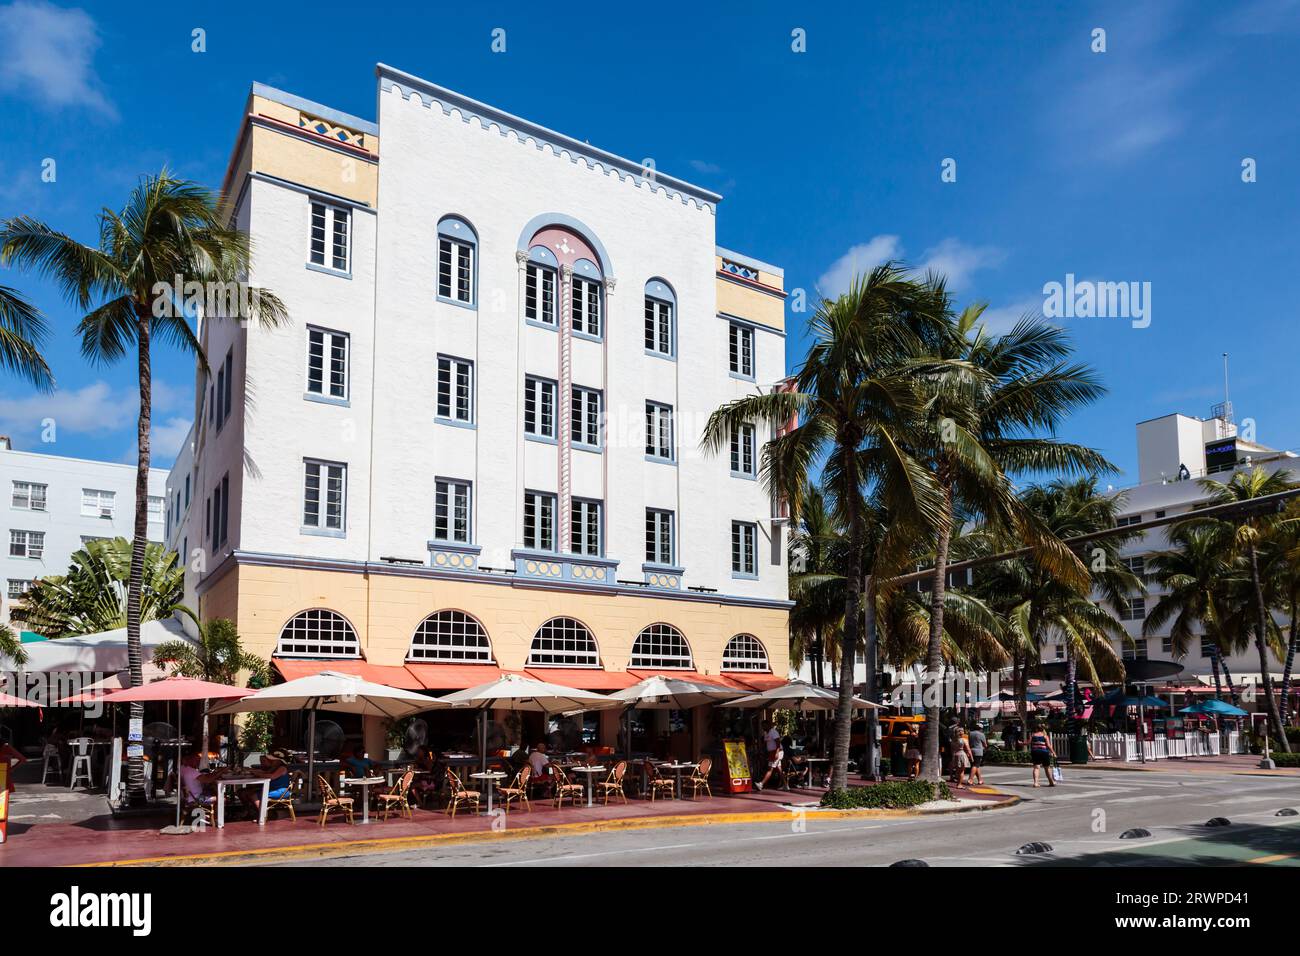 The Eddison Hotel & Ocean's Ten Restaurant.960 Ocean Drive, City of Miami Beach, South Beach, Florida, USA Stock Photo